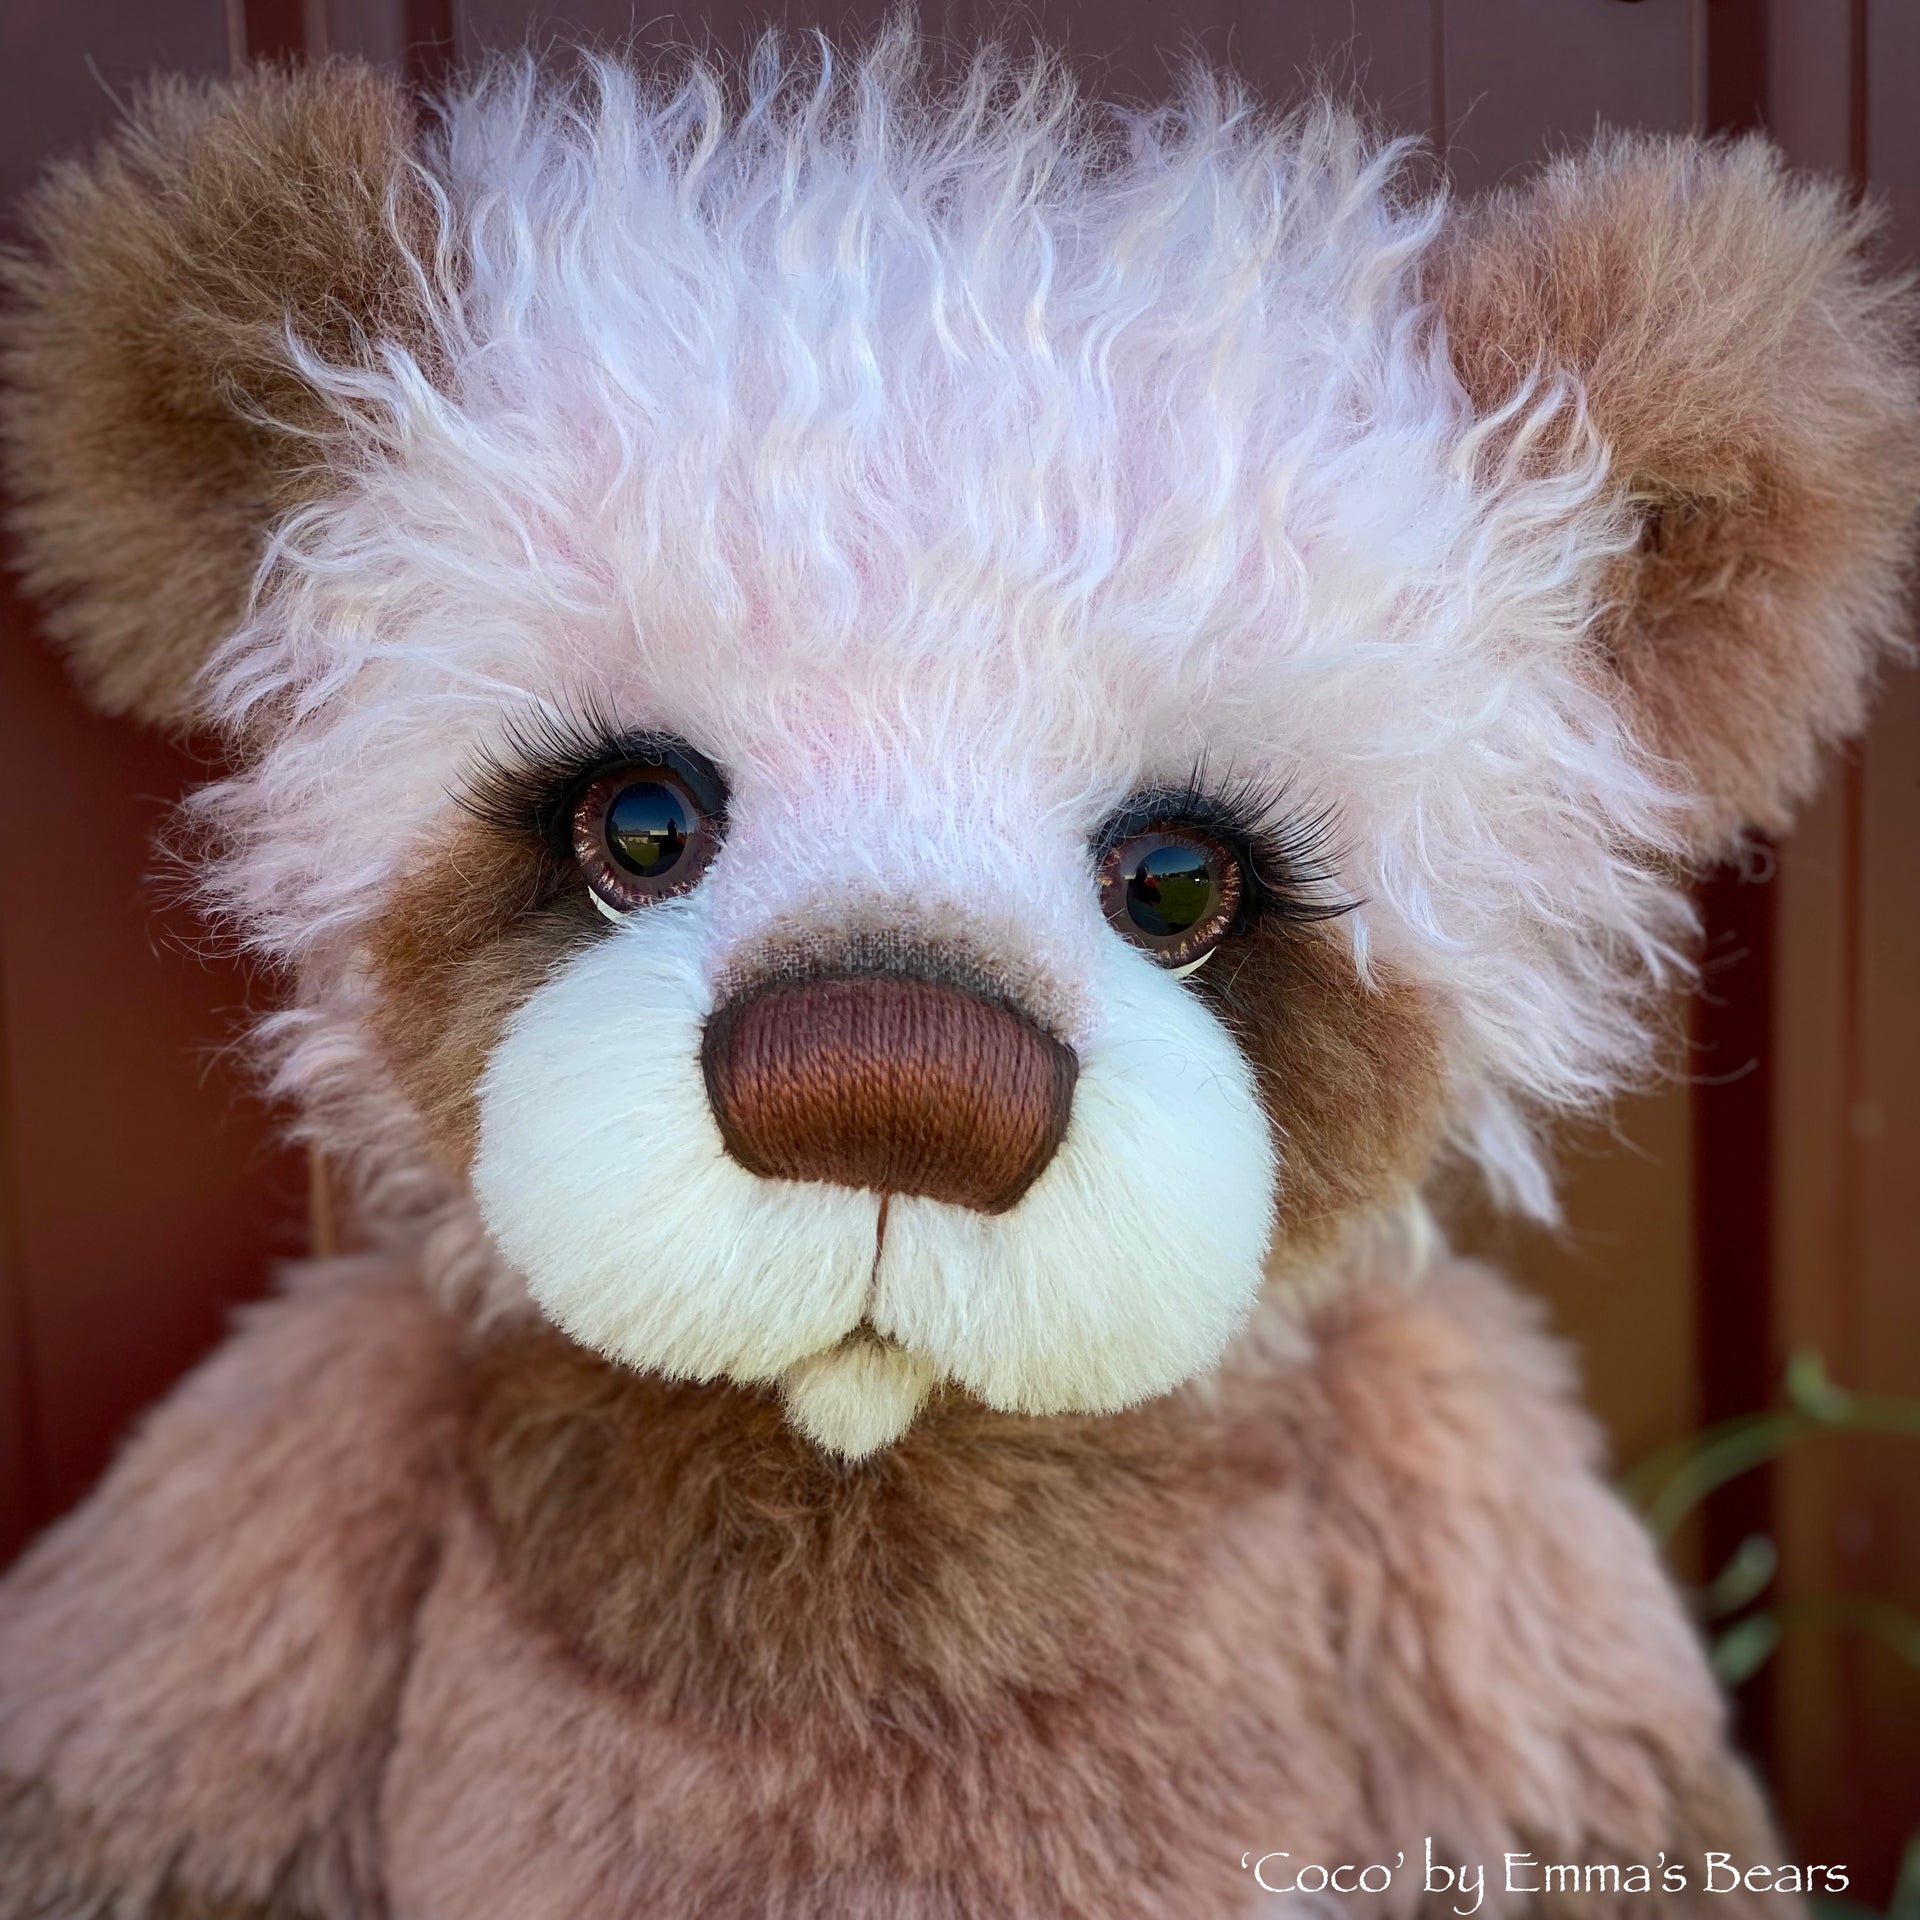 Coco - 18" Hand-Dyed Mohair and Alpaca Artist Baby Bear by Emma's Bears - OOAK